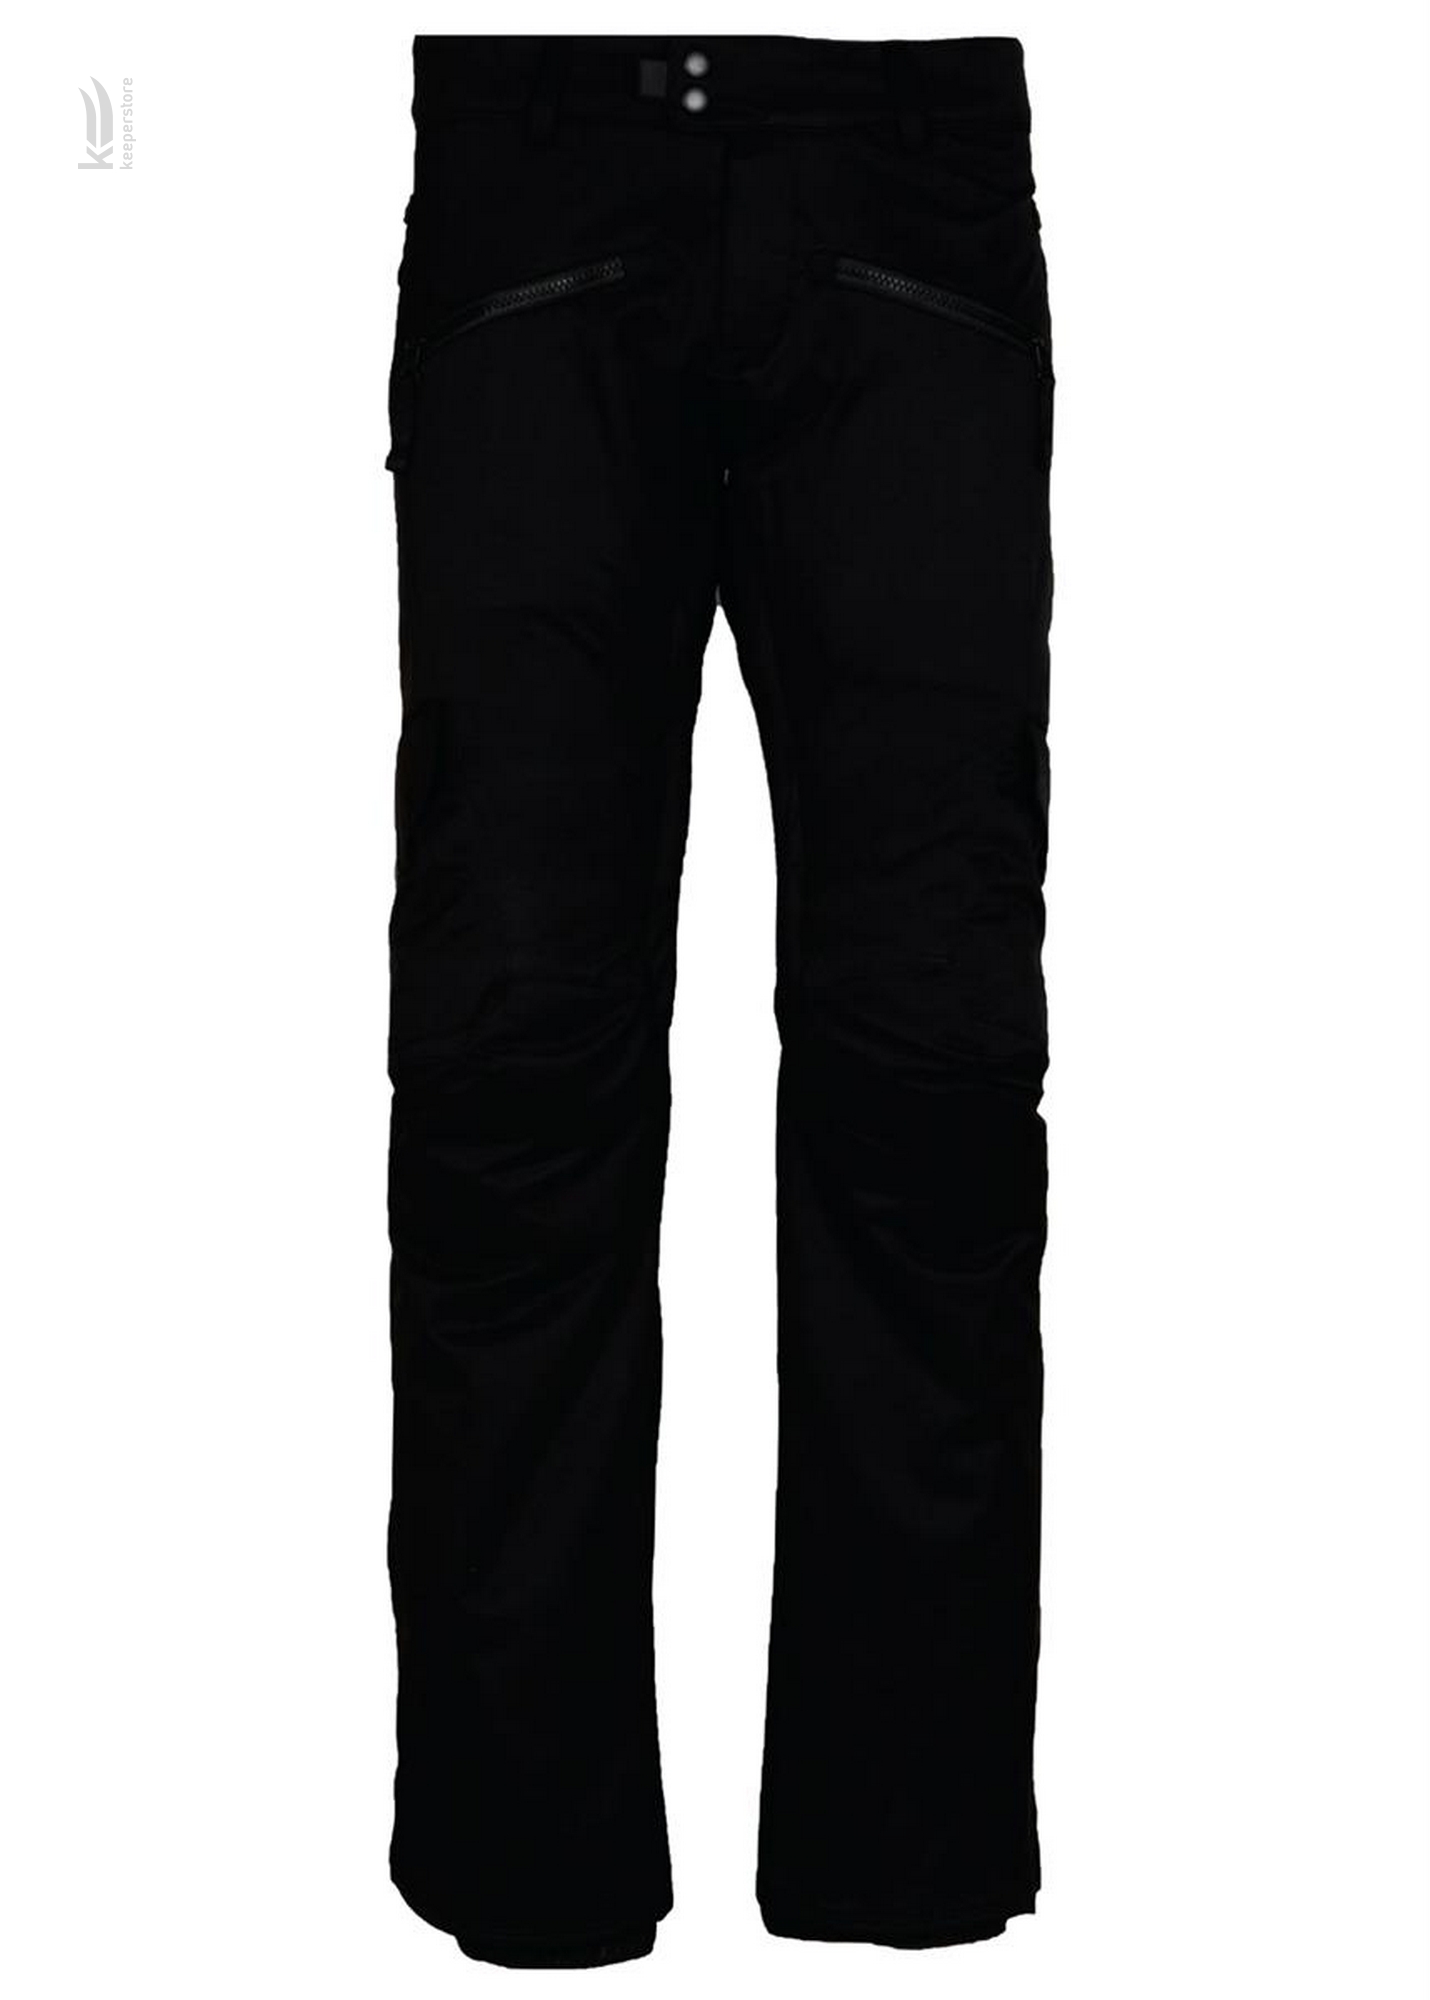 Черные штаны 686 Authentic Mistress Insulated Pant Black Jade (S)